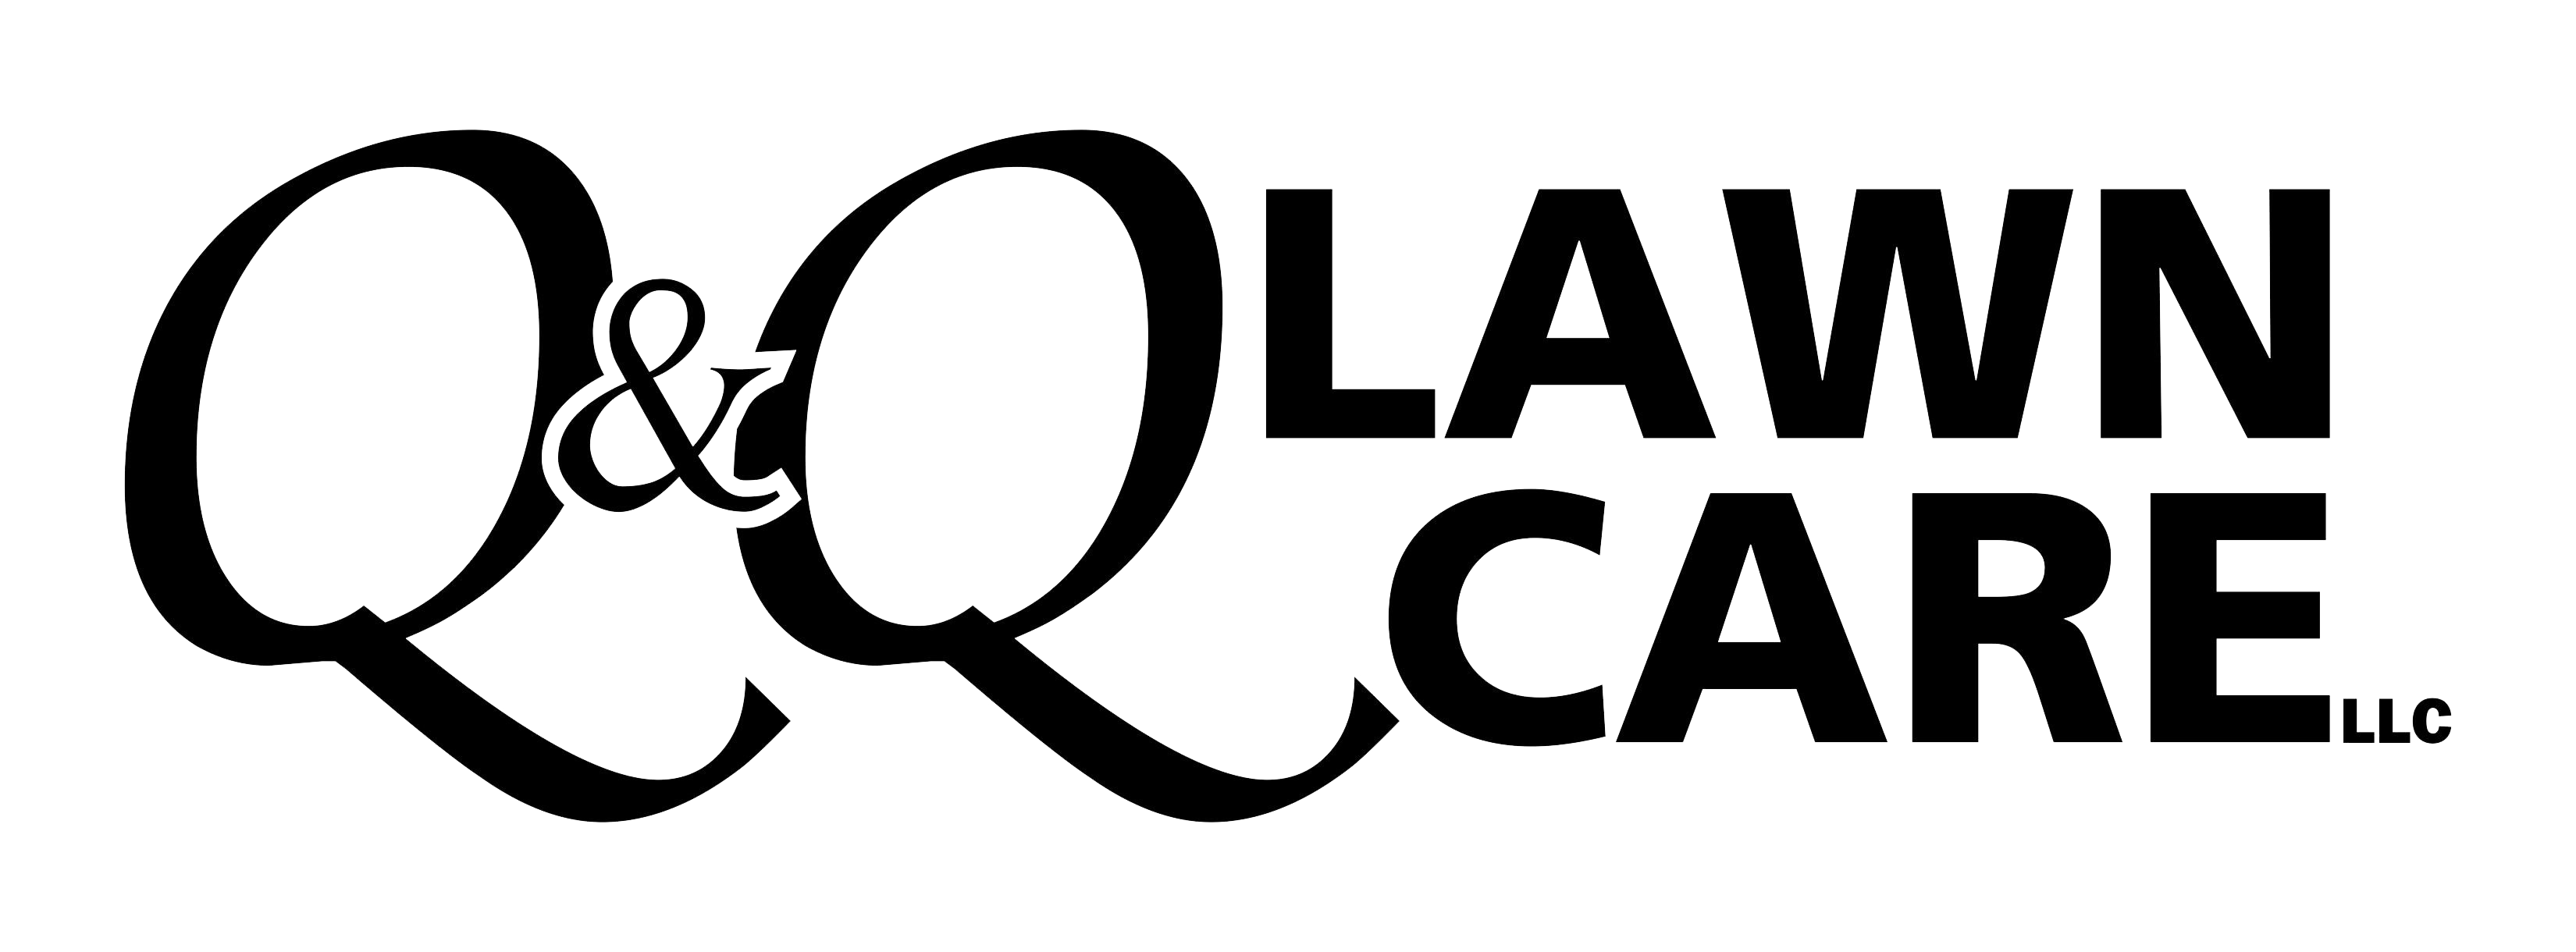 Q & Q's Lawn Care LLC Logo